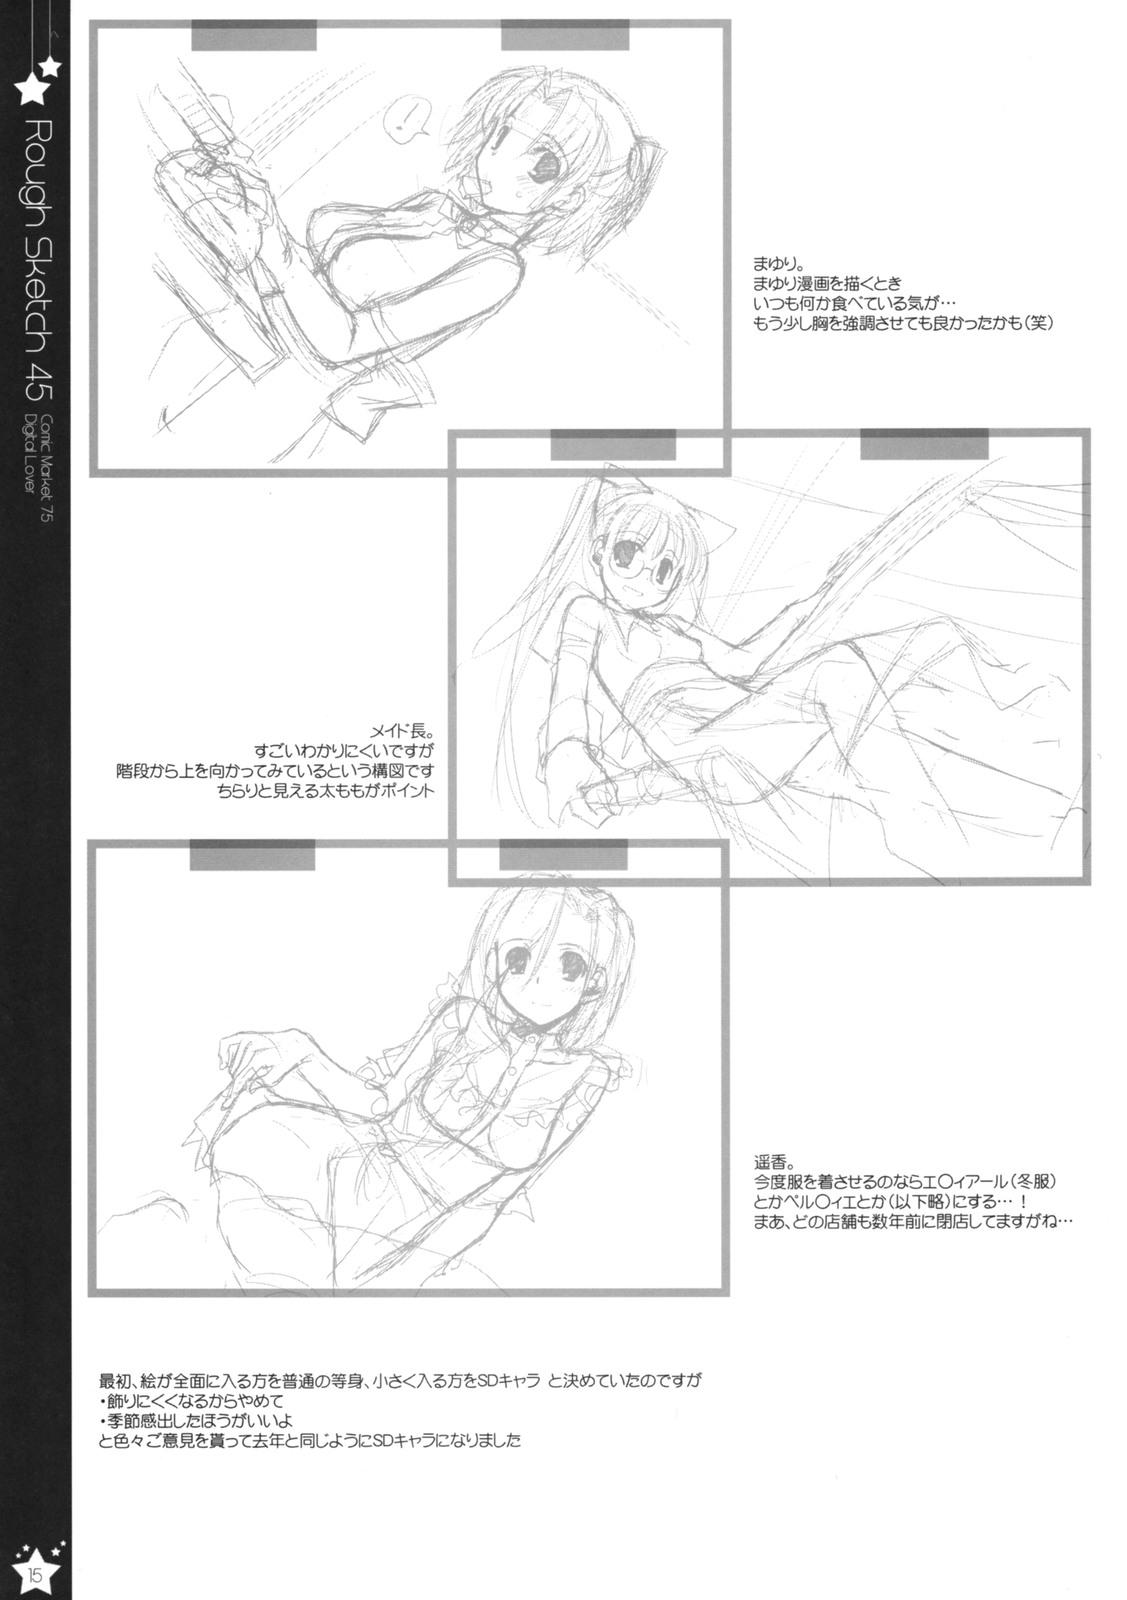 Public Nudity Rough Sketch 45 - Toaru majutsu no index Kannagi Toradora Panties - Page 15